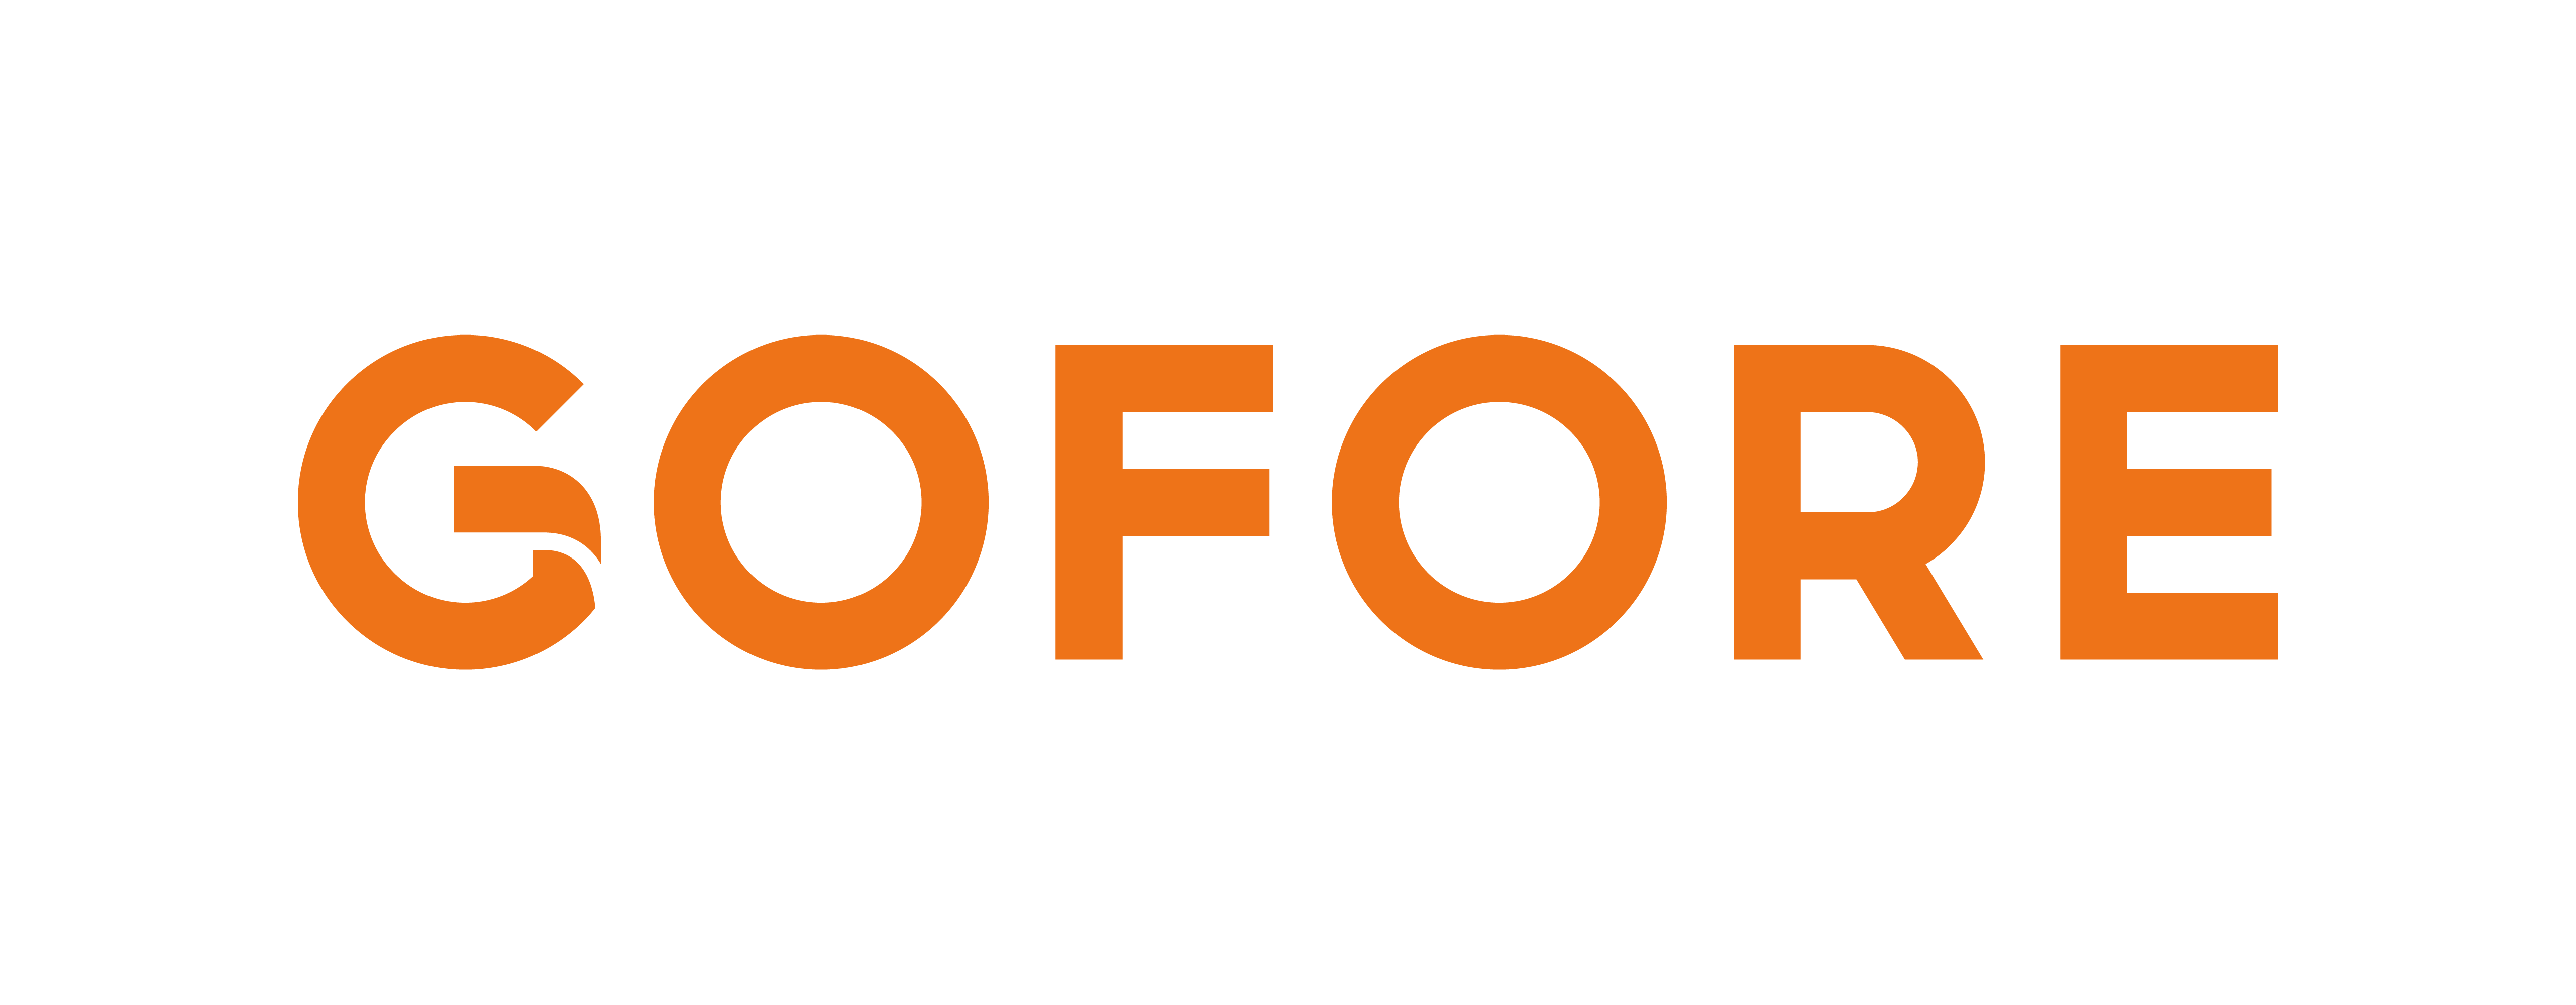 gofore_logo_orange